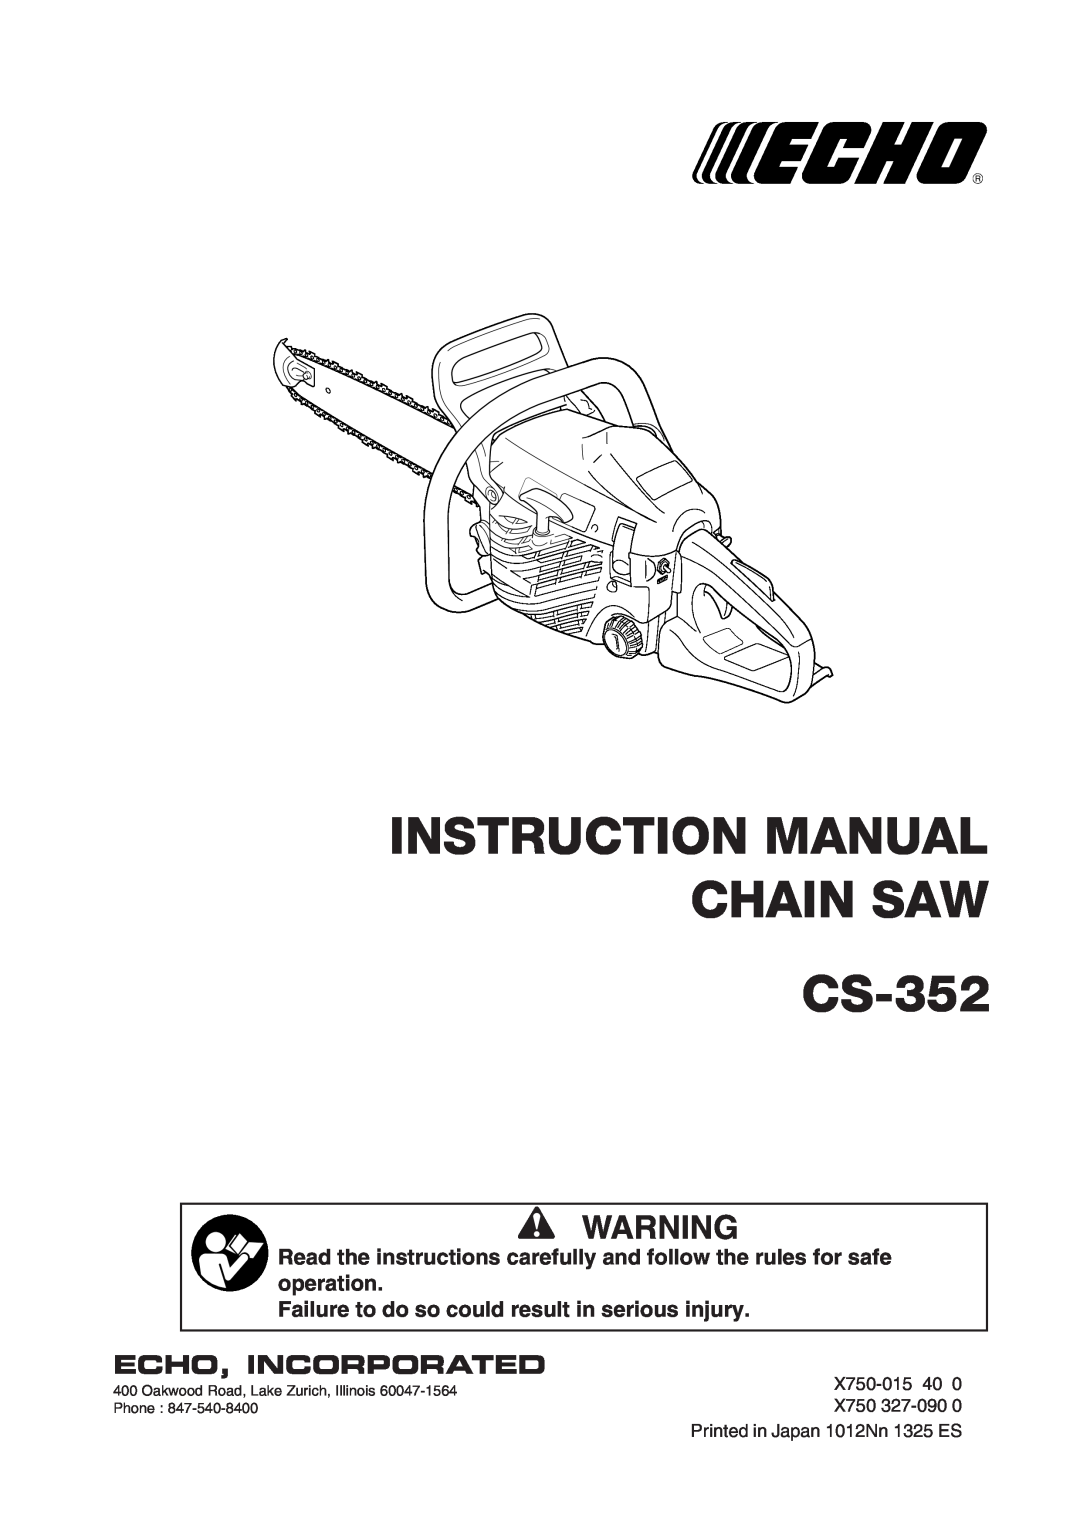 Echo instruction manual Burn Hazard, CS-352 CHAIN SAW 